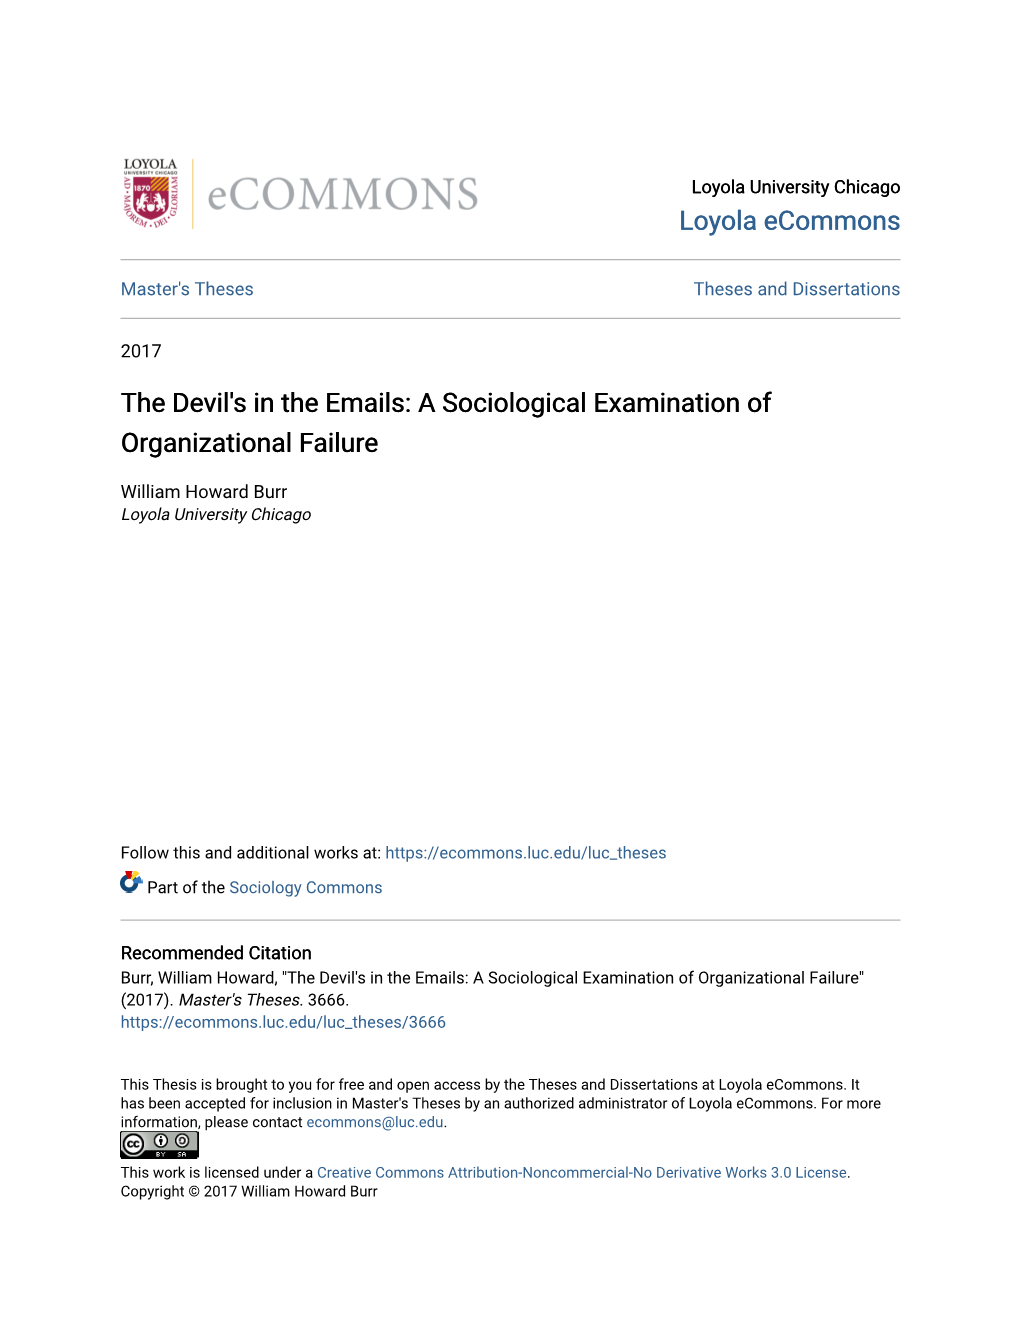 A Sociological Examination of Organizational Failure